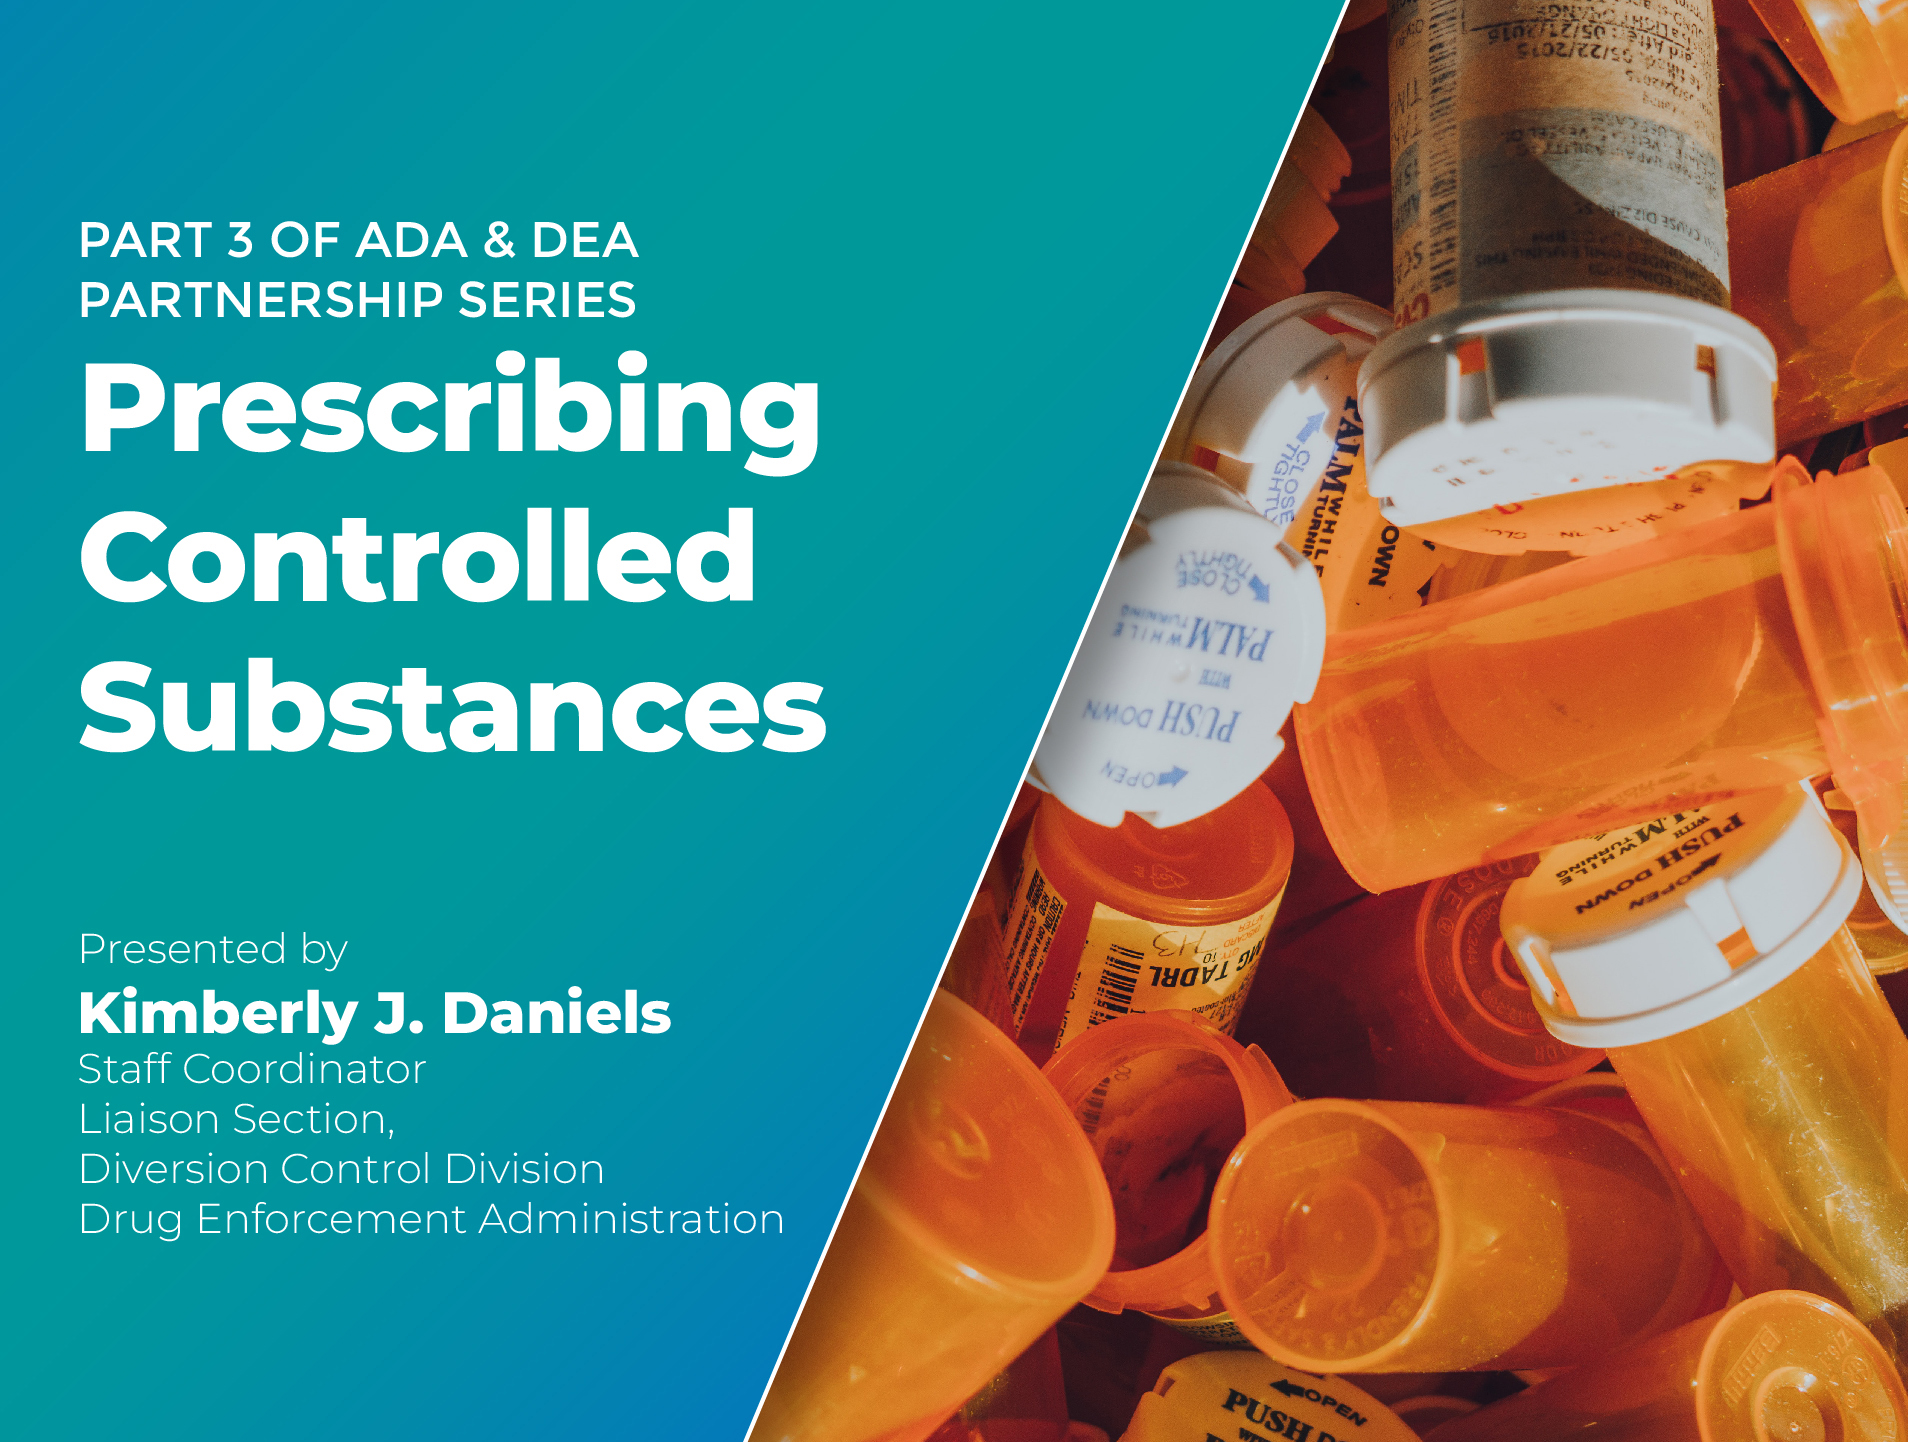 Prescribing Controlled Substances (Part 3 of ADA & DEA Series)